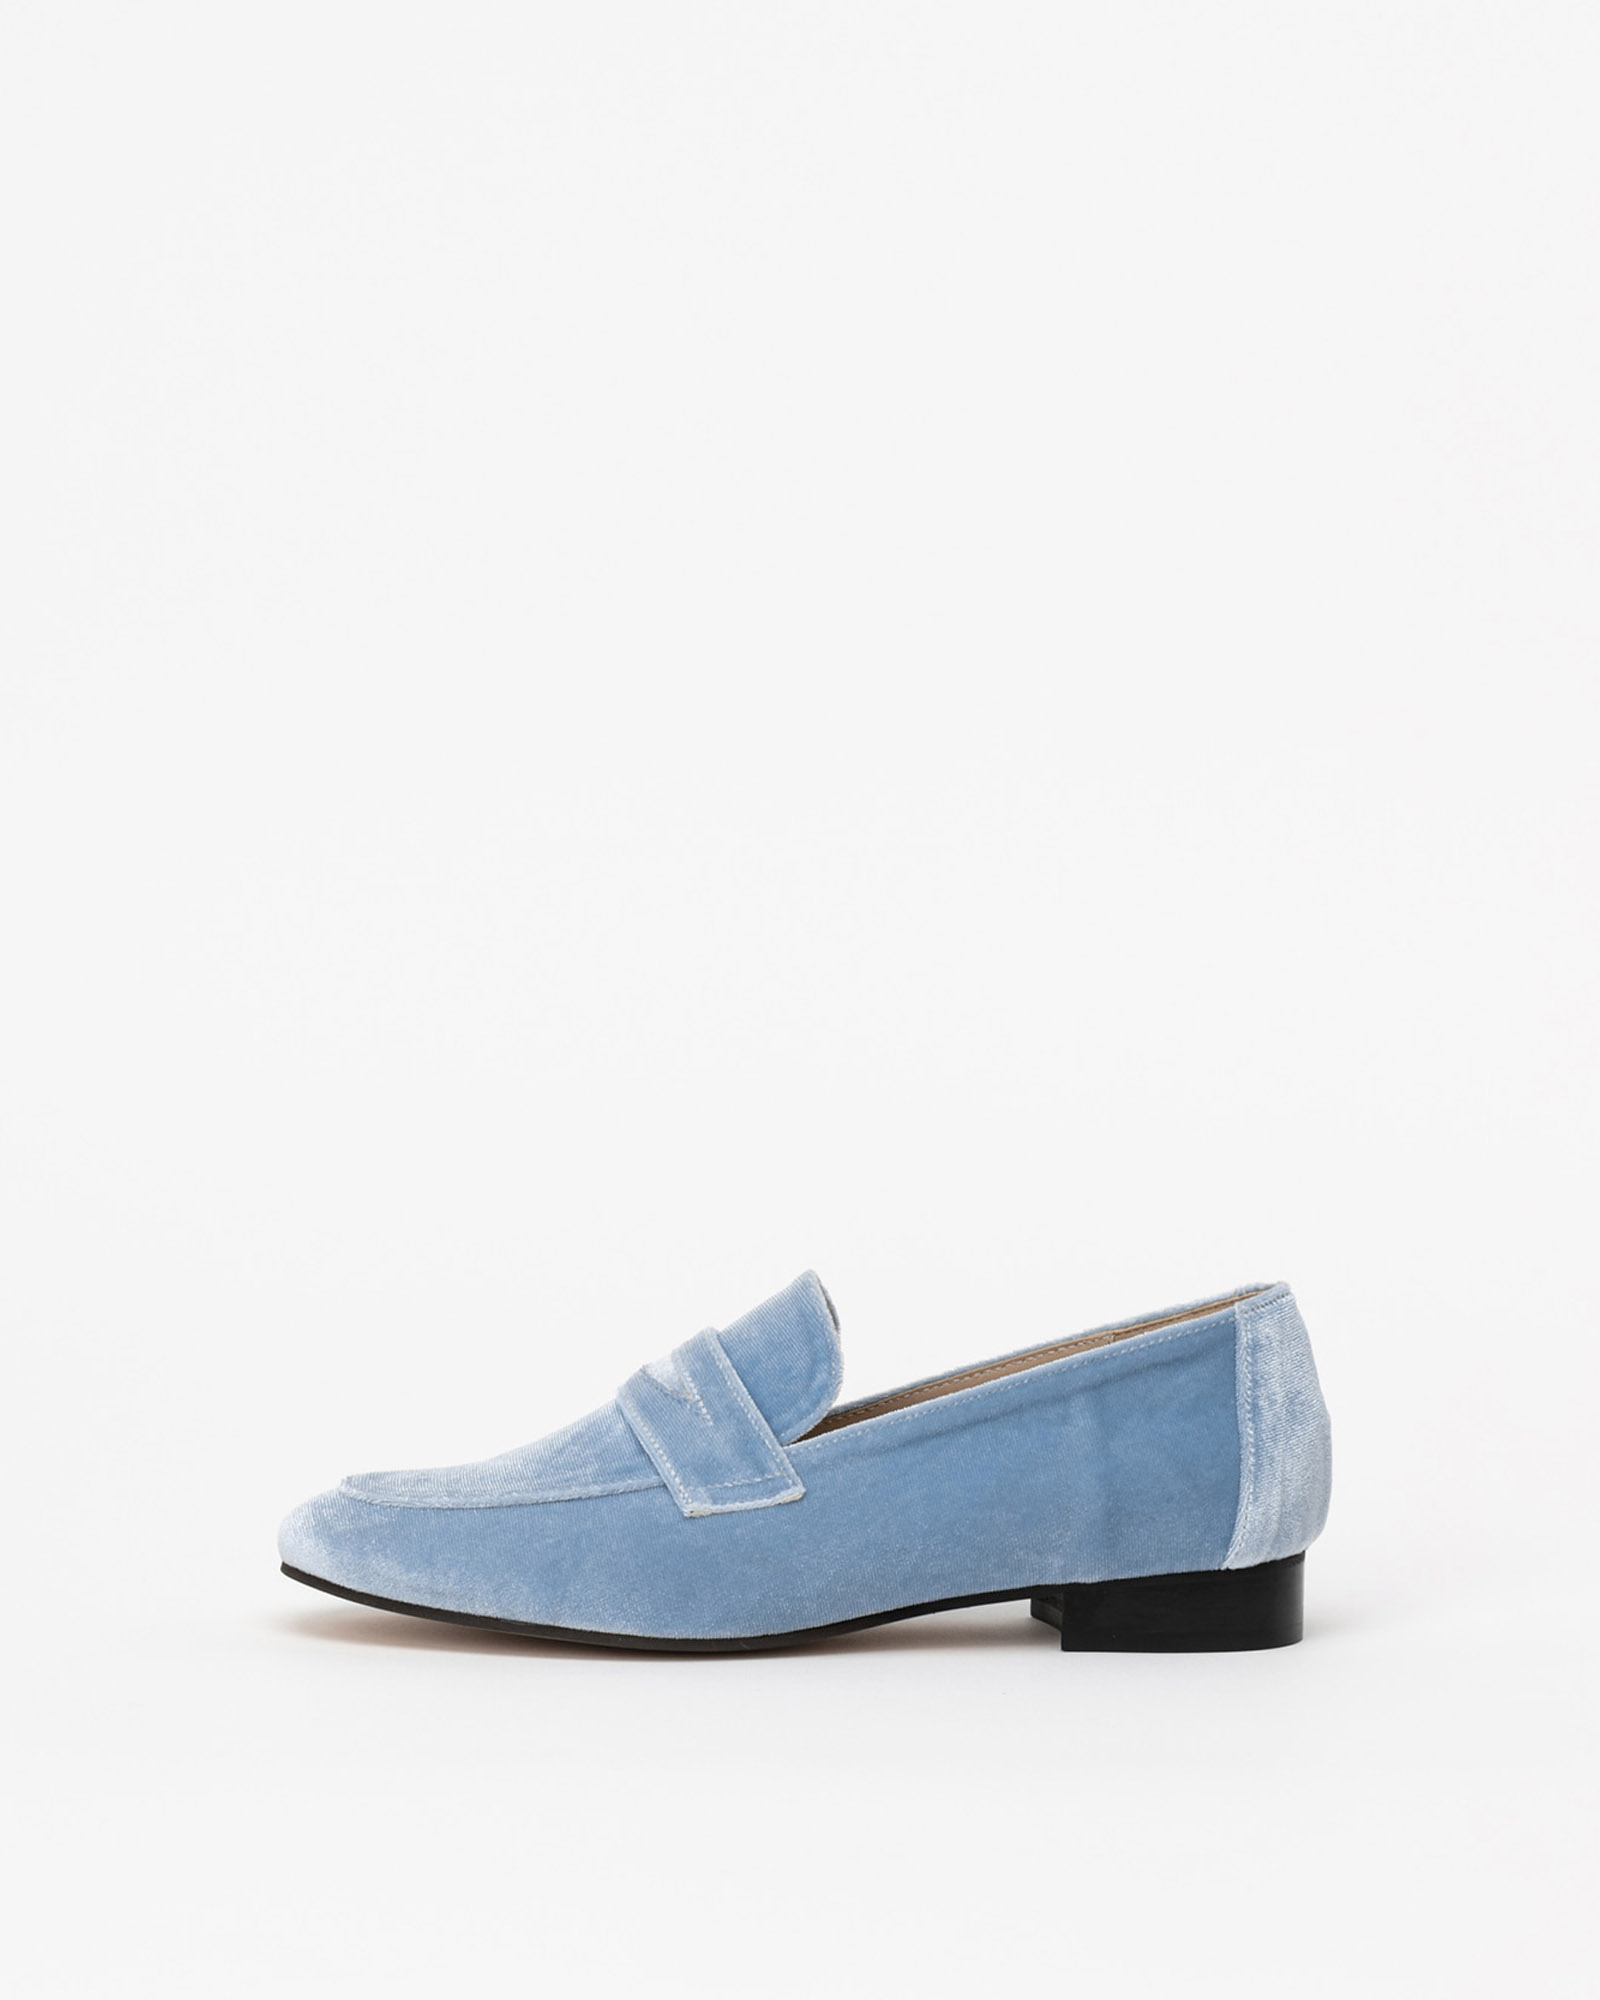 Sante Soft Loafers in Airy Blue Velvet